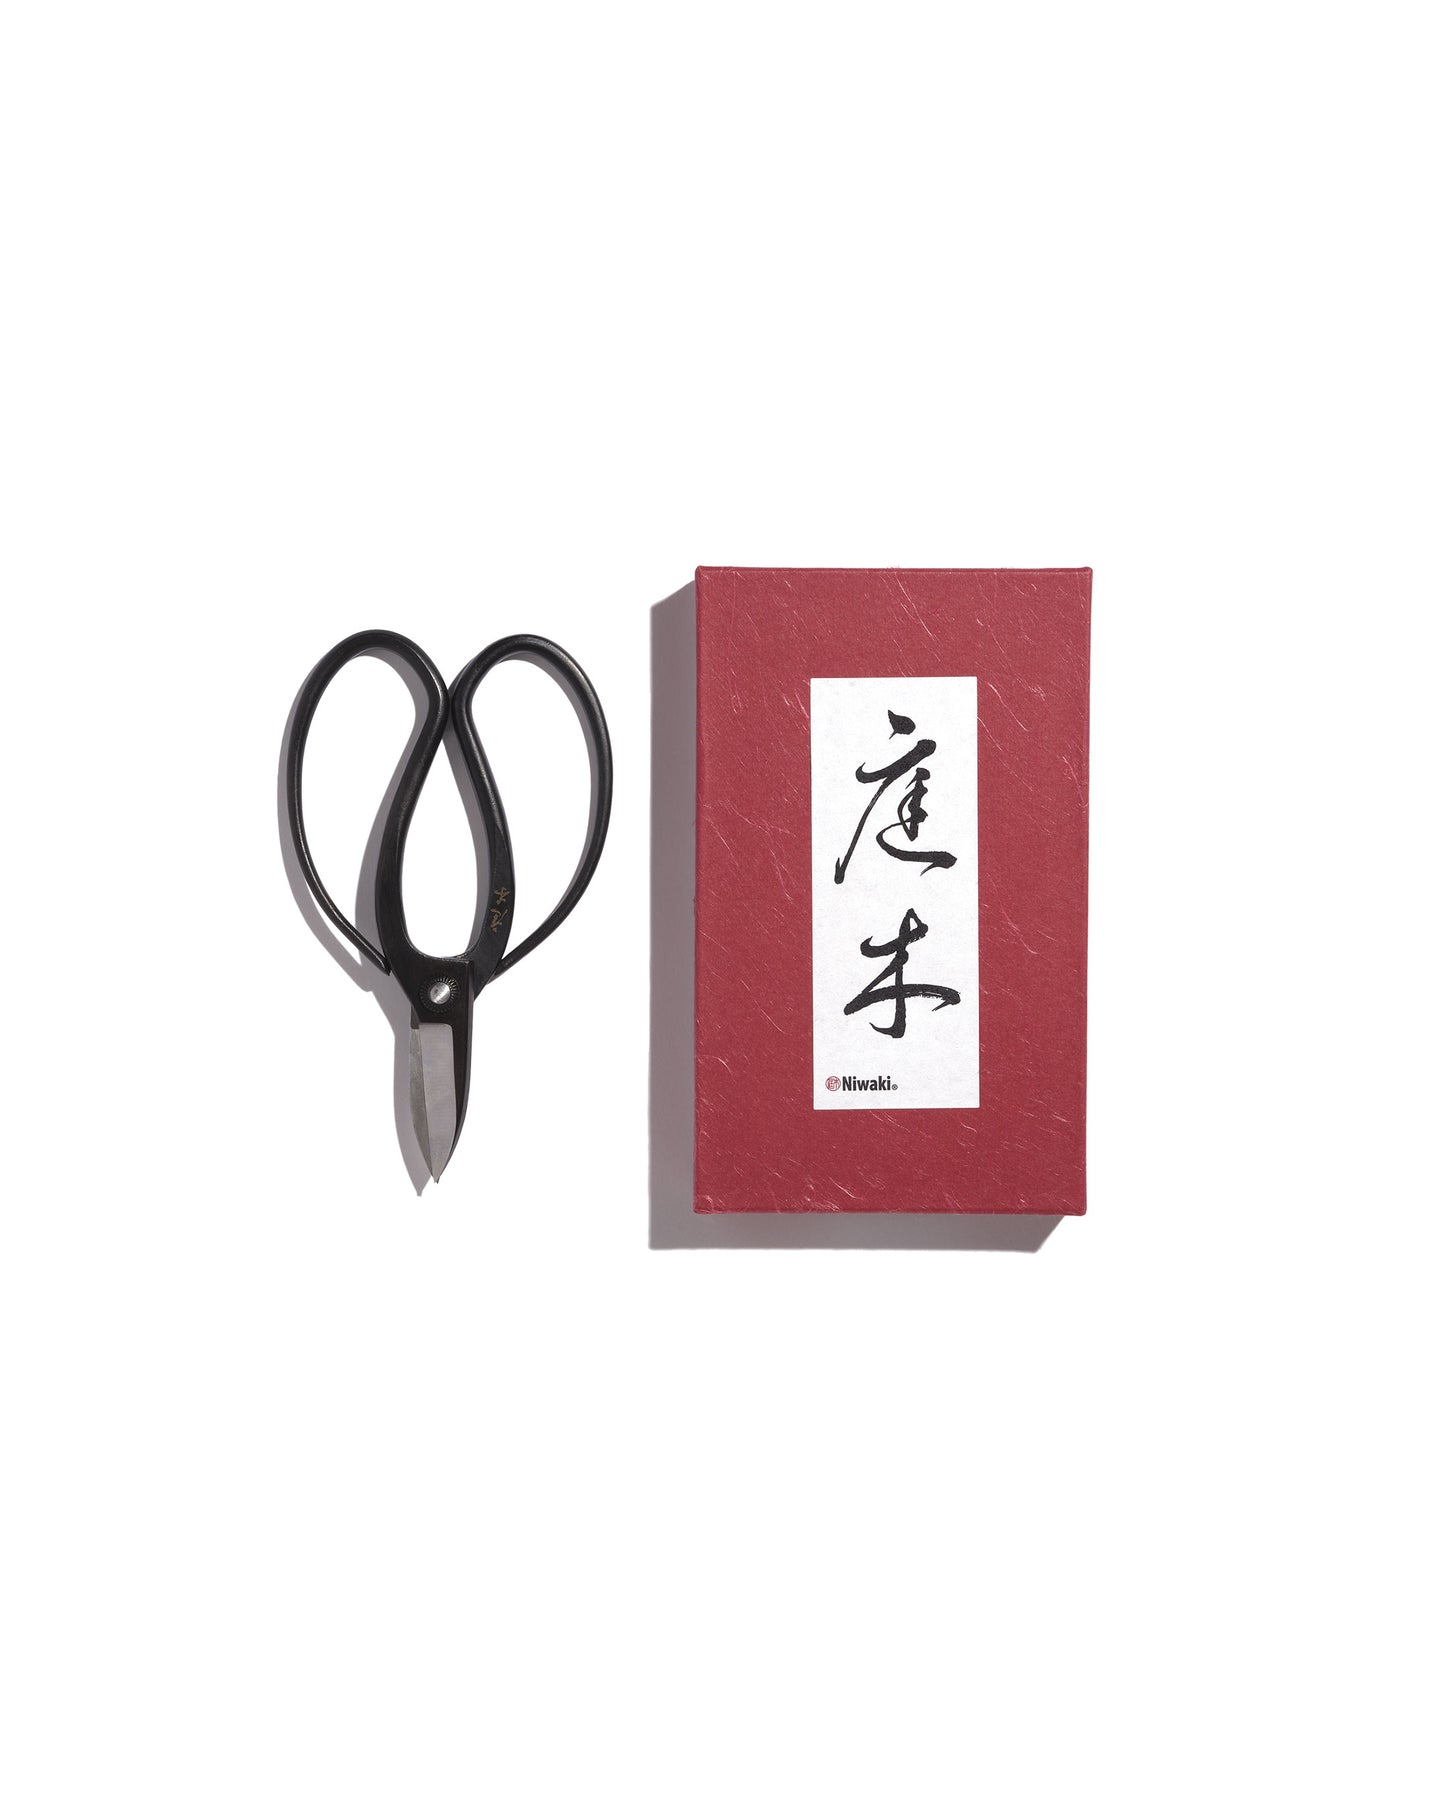 Japanese forged steel garden scissors